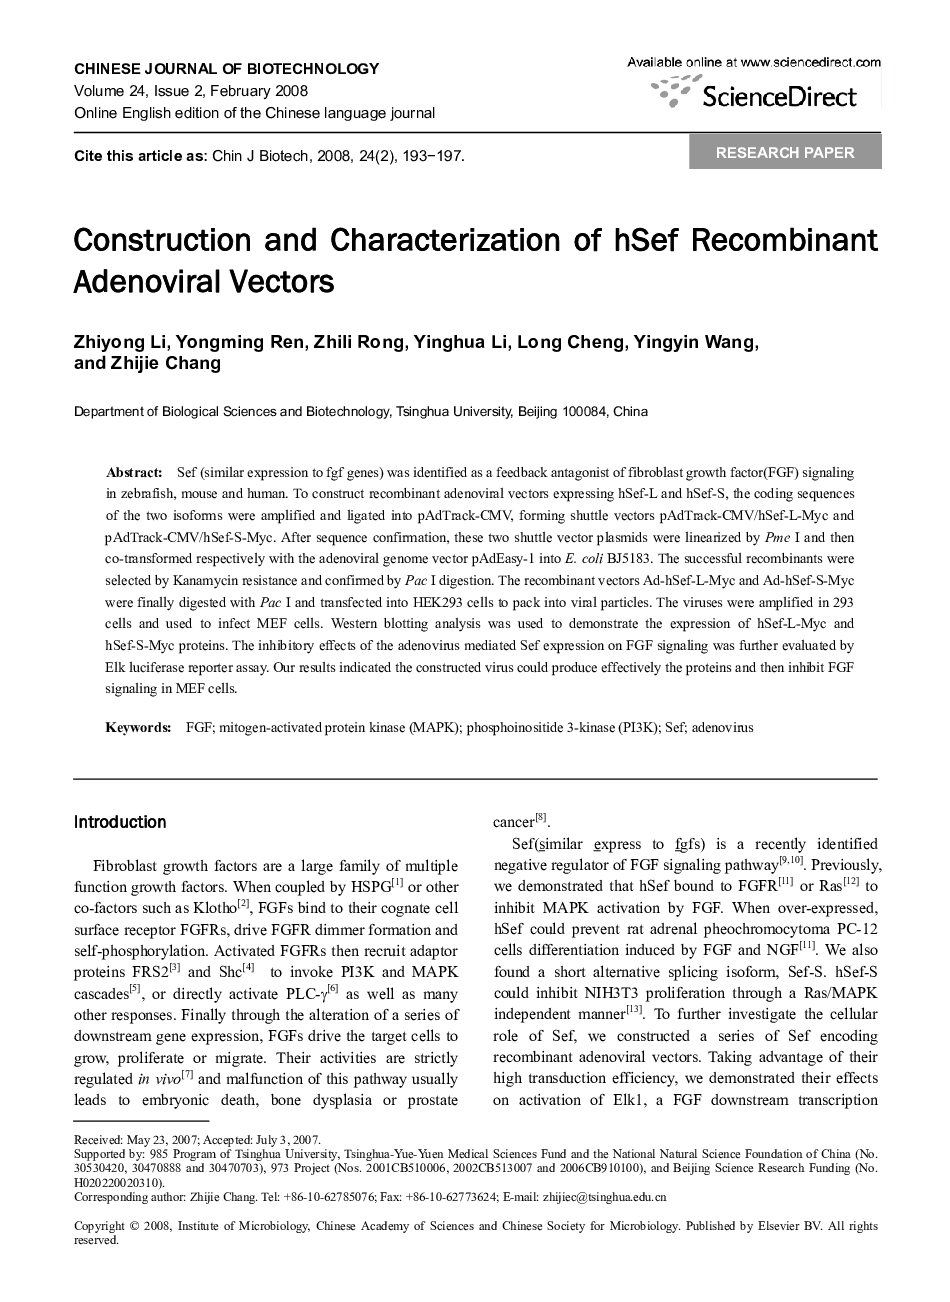 Construction and Characterization of hSef Recombinant Adenoviral Vectors